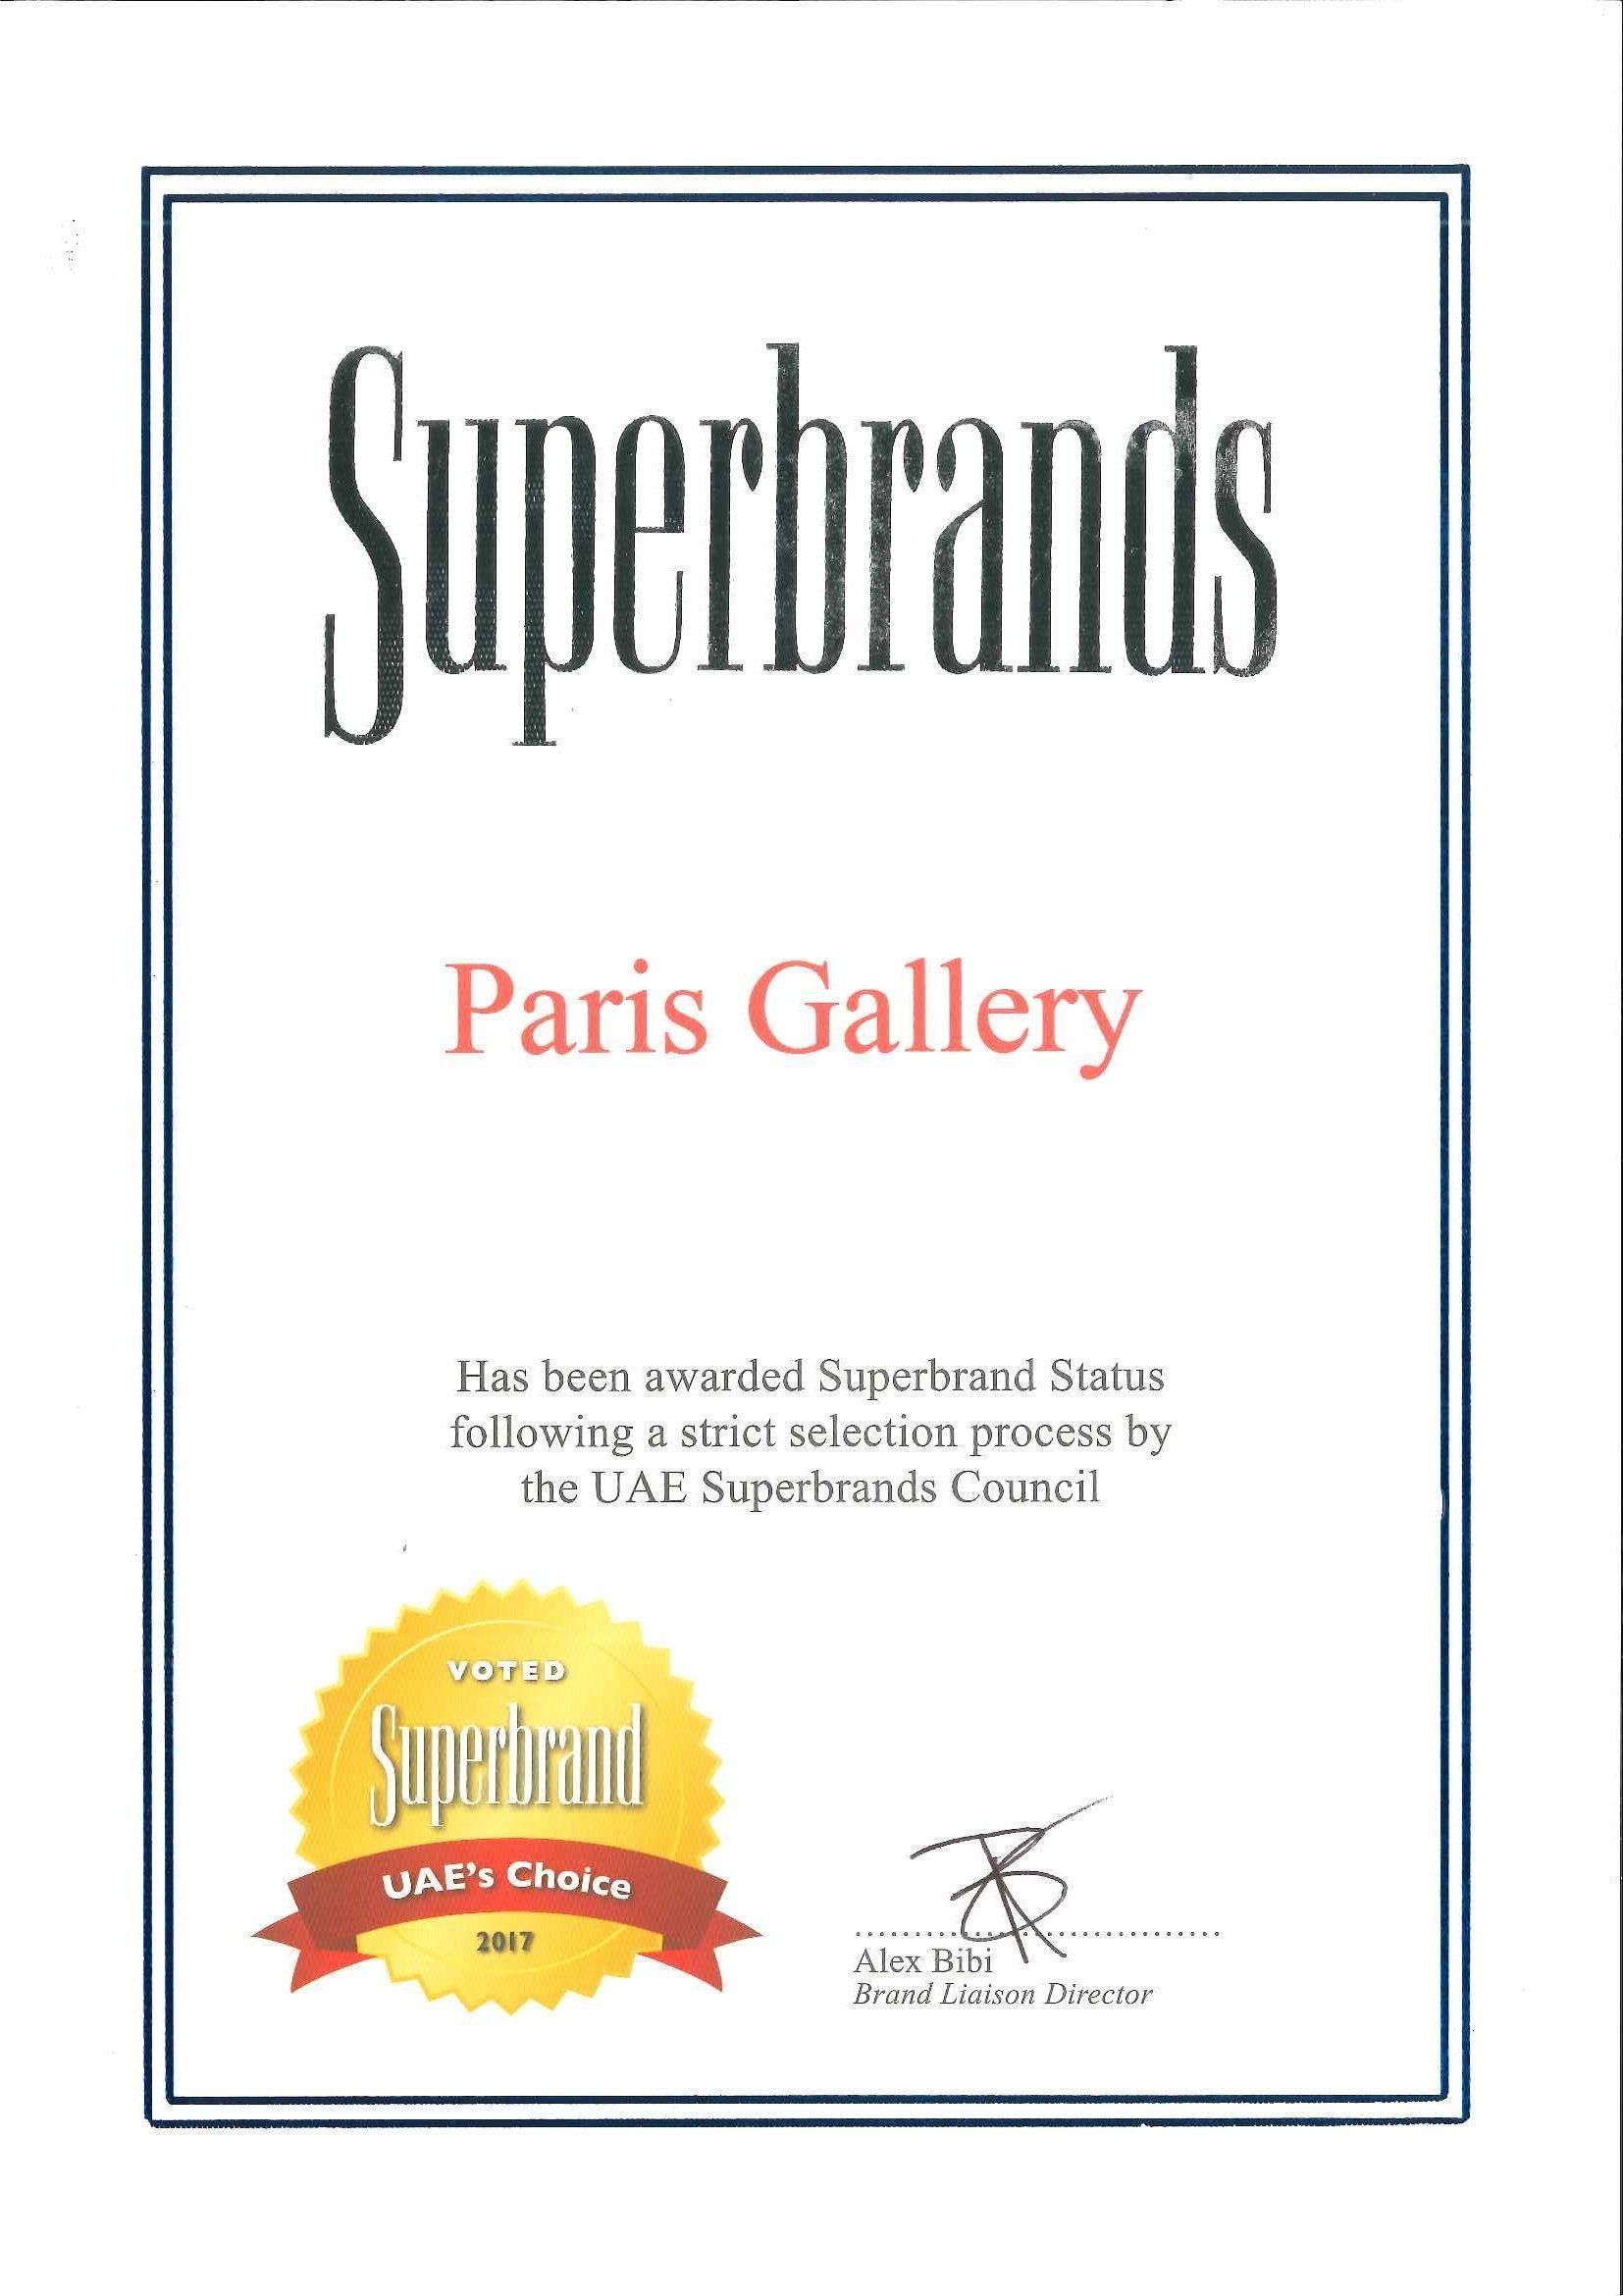 Paris Gallery Logo - Paris Gallery Superbrand 2017